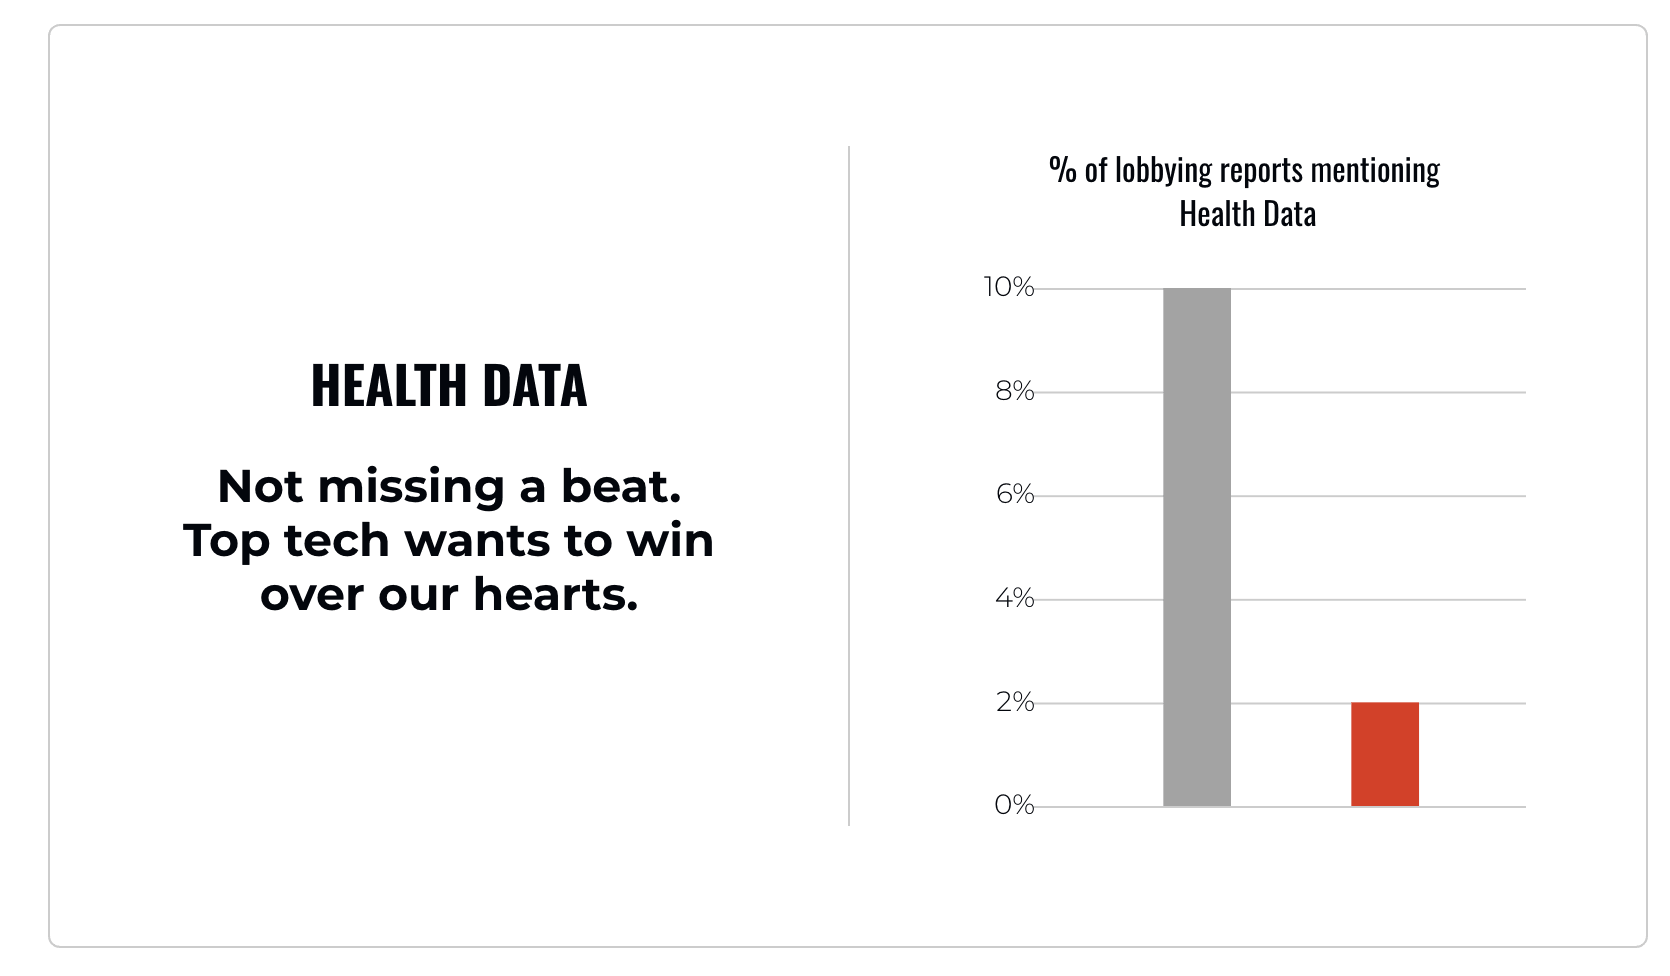 Health data